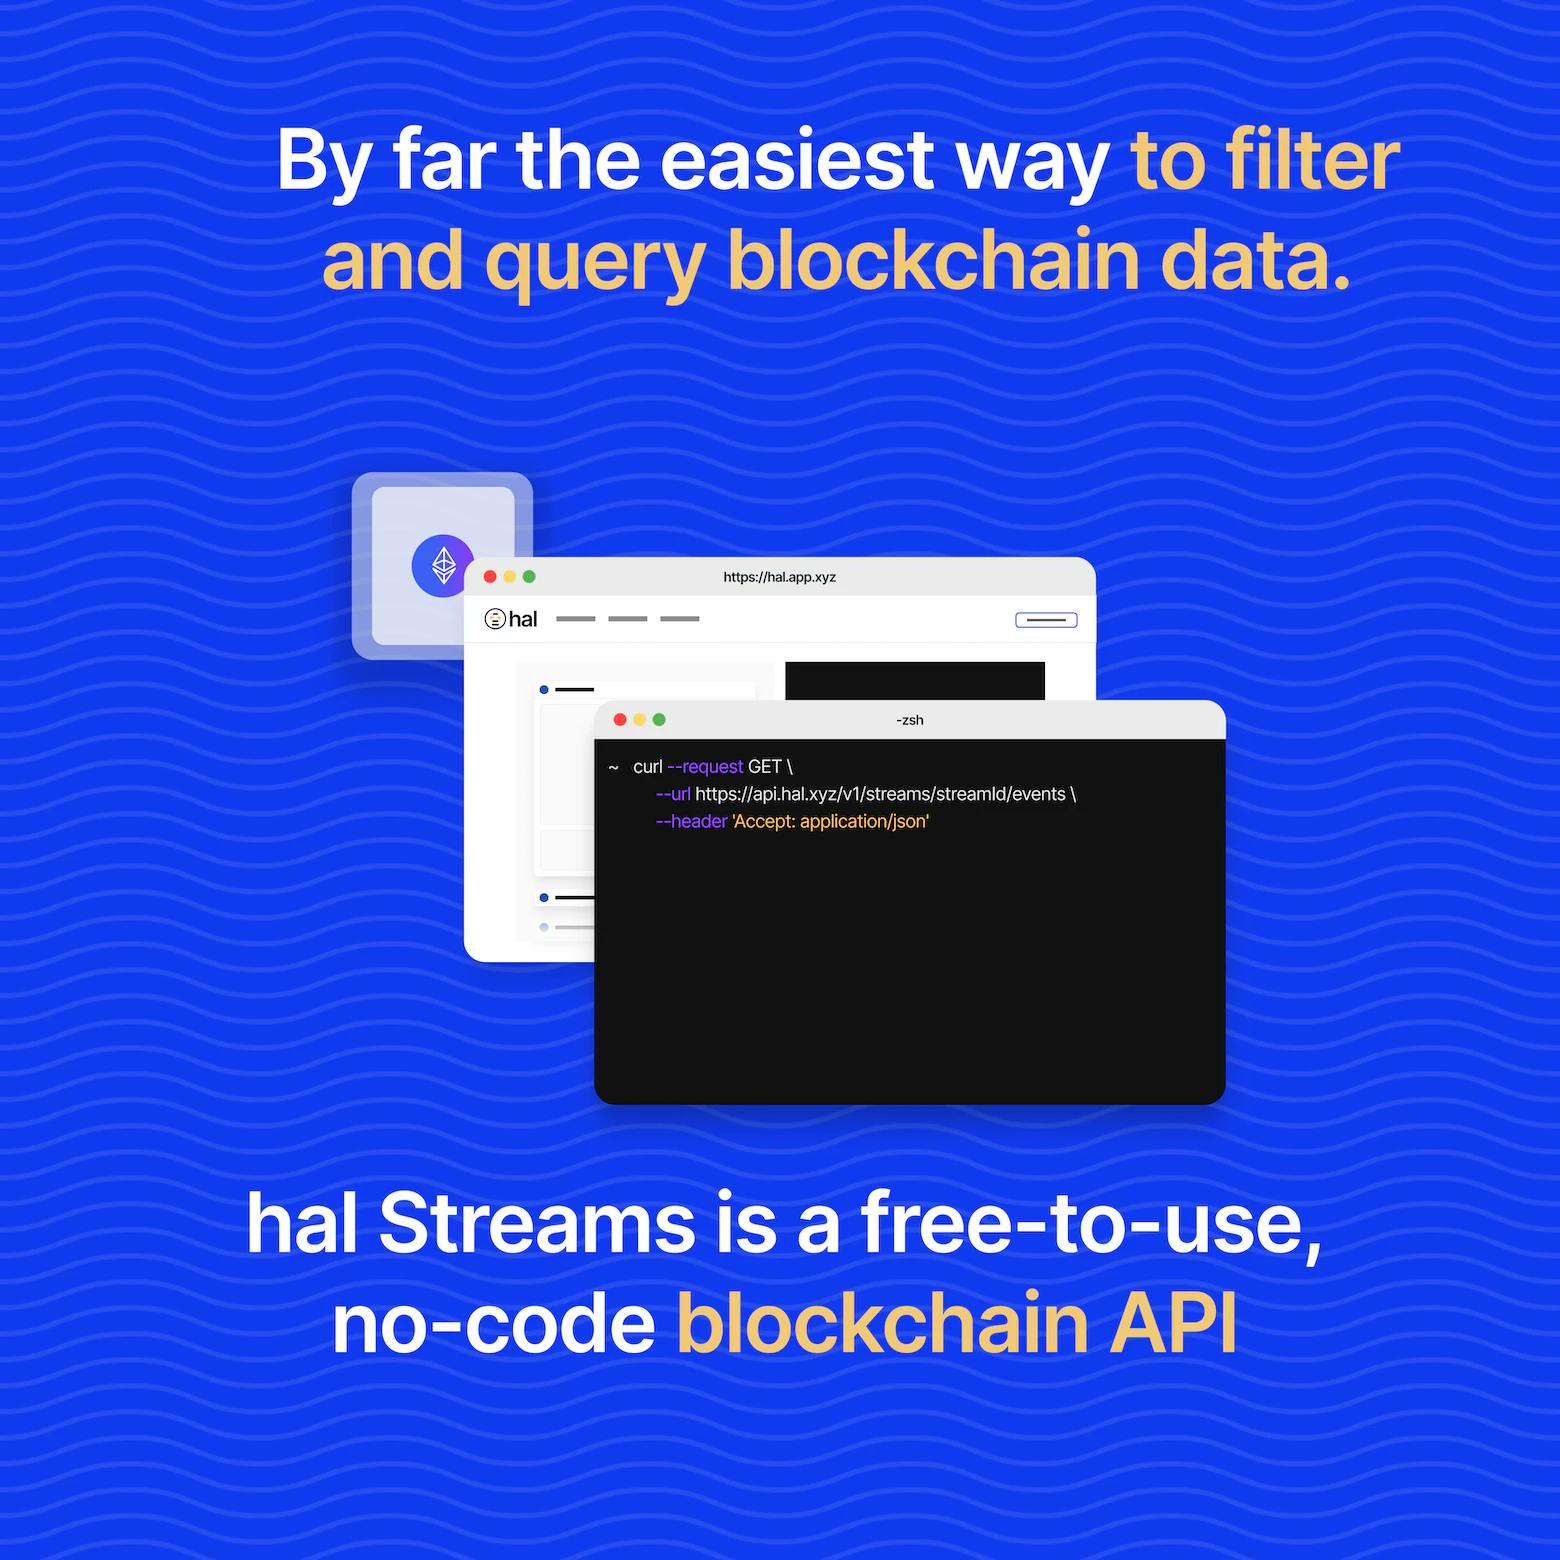 A no-code blockchain API.